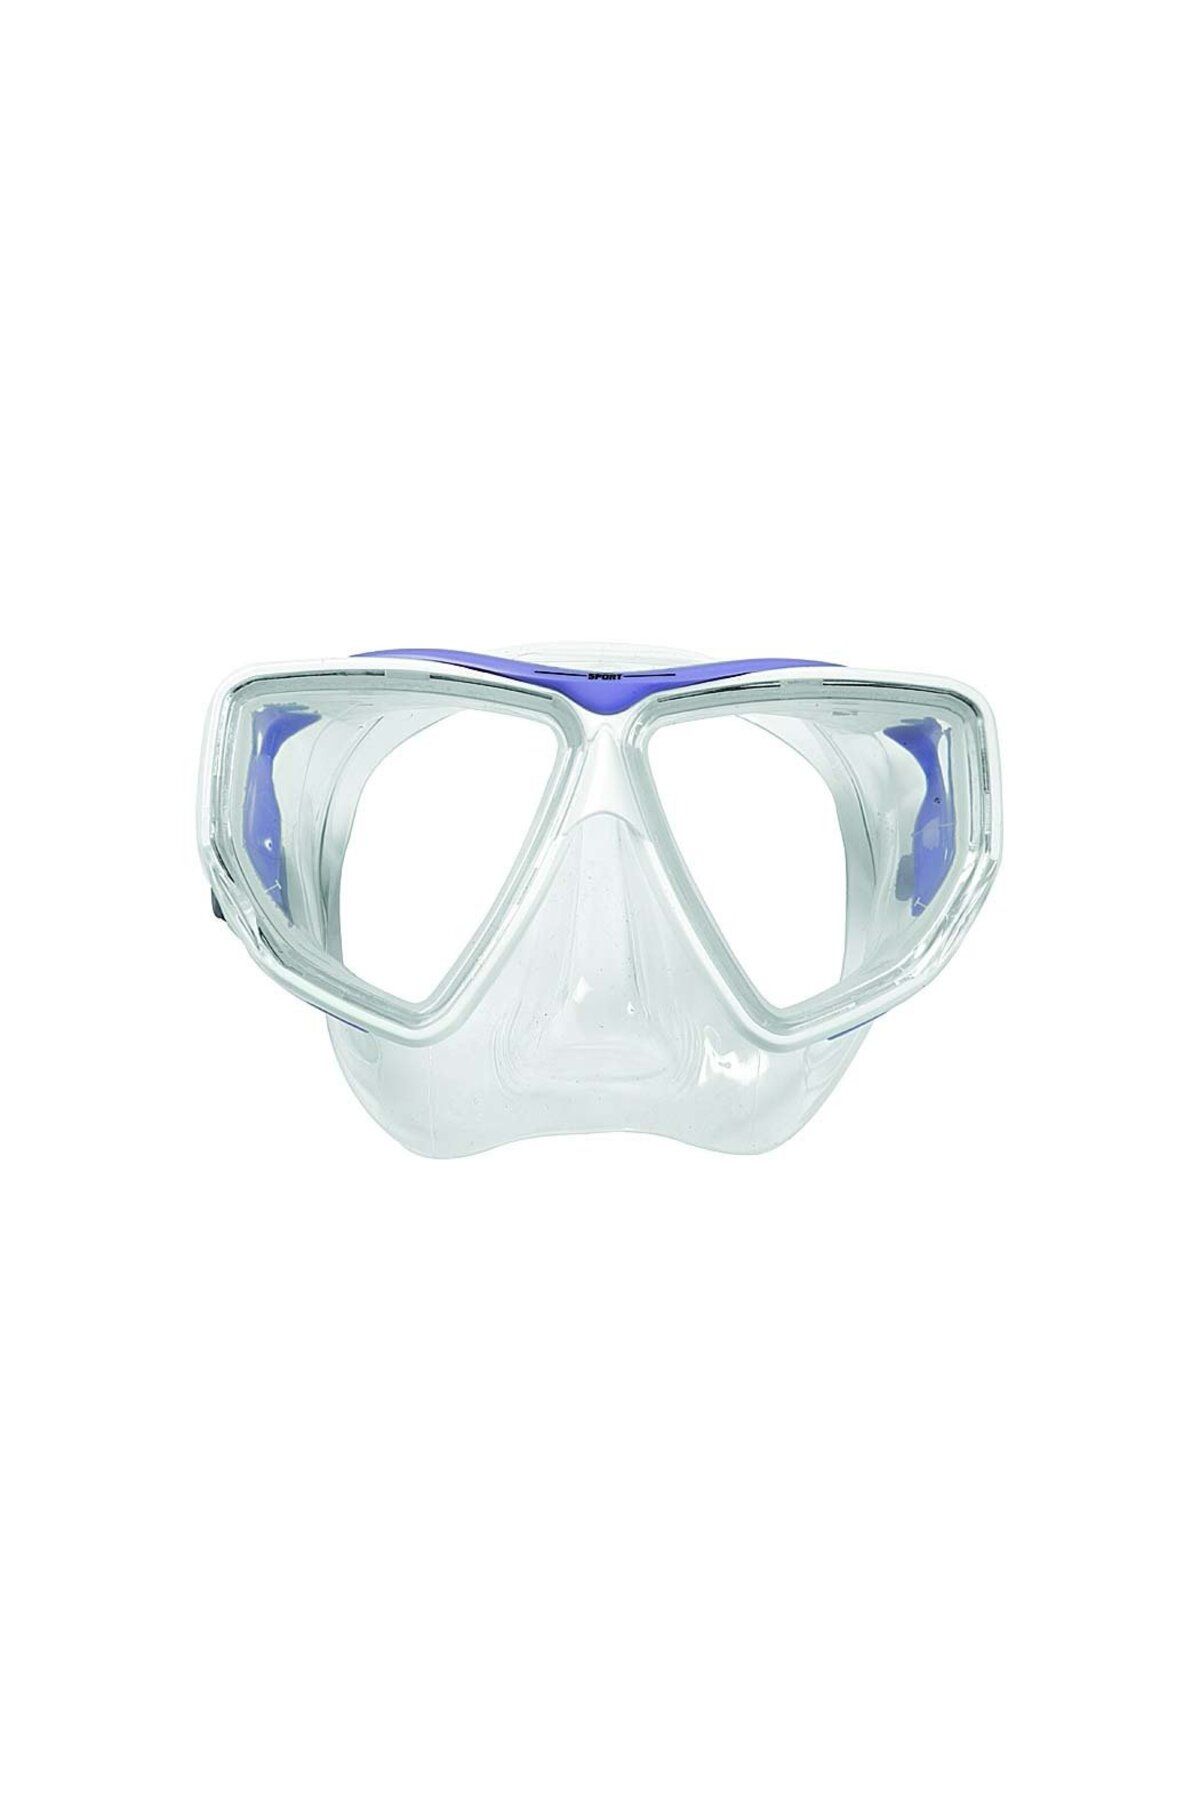 Aqua Lung Maske Kea Lx Lila